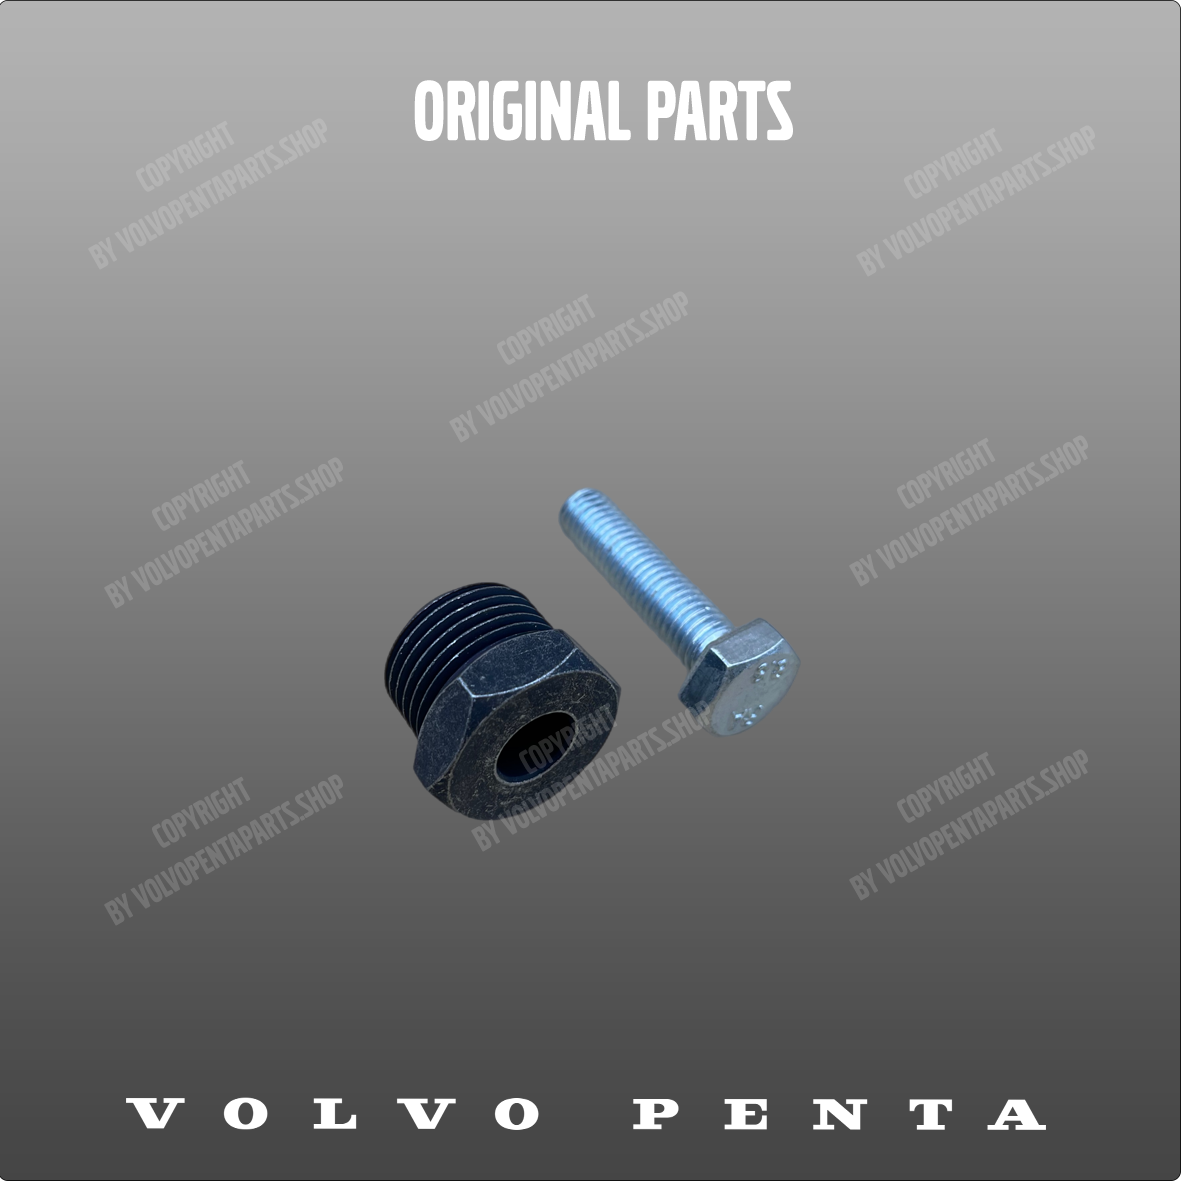 Volvo Penta puller screw 3843949